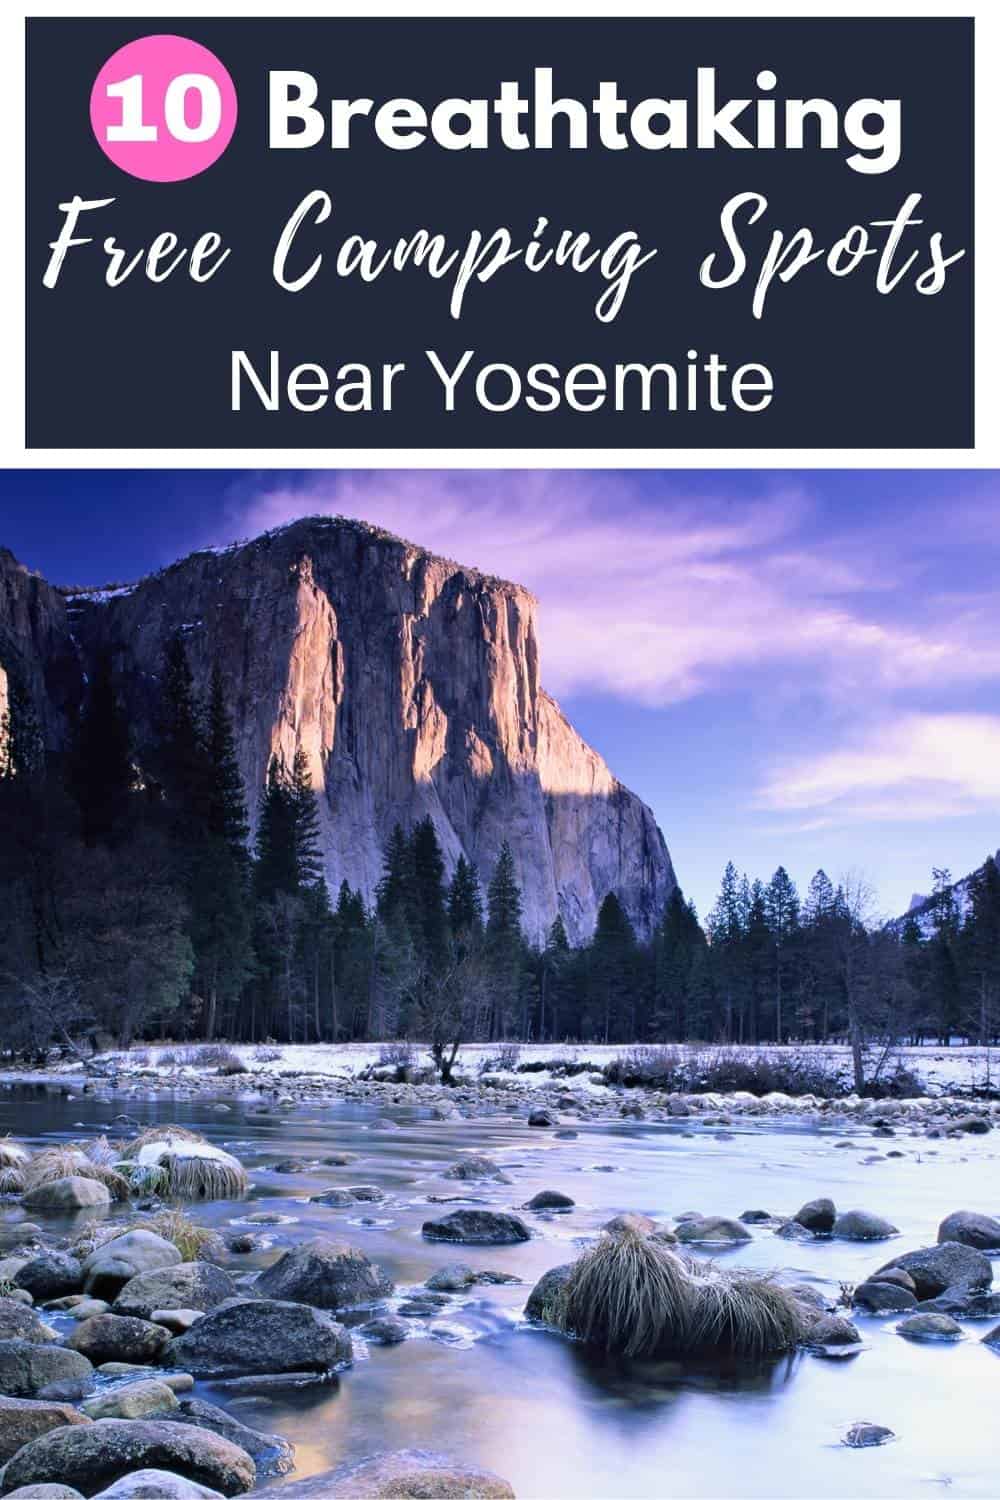 To 10 Free Camping Spots Near Yosemite